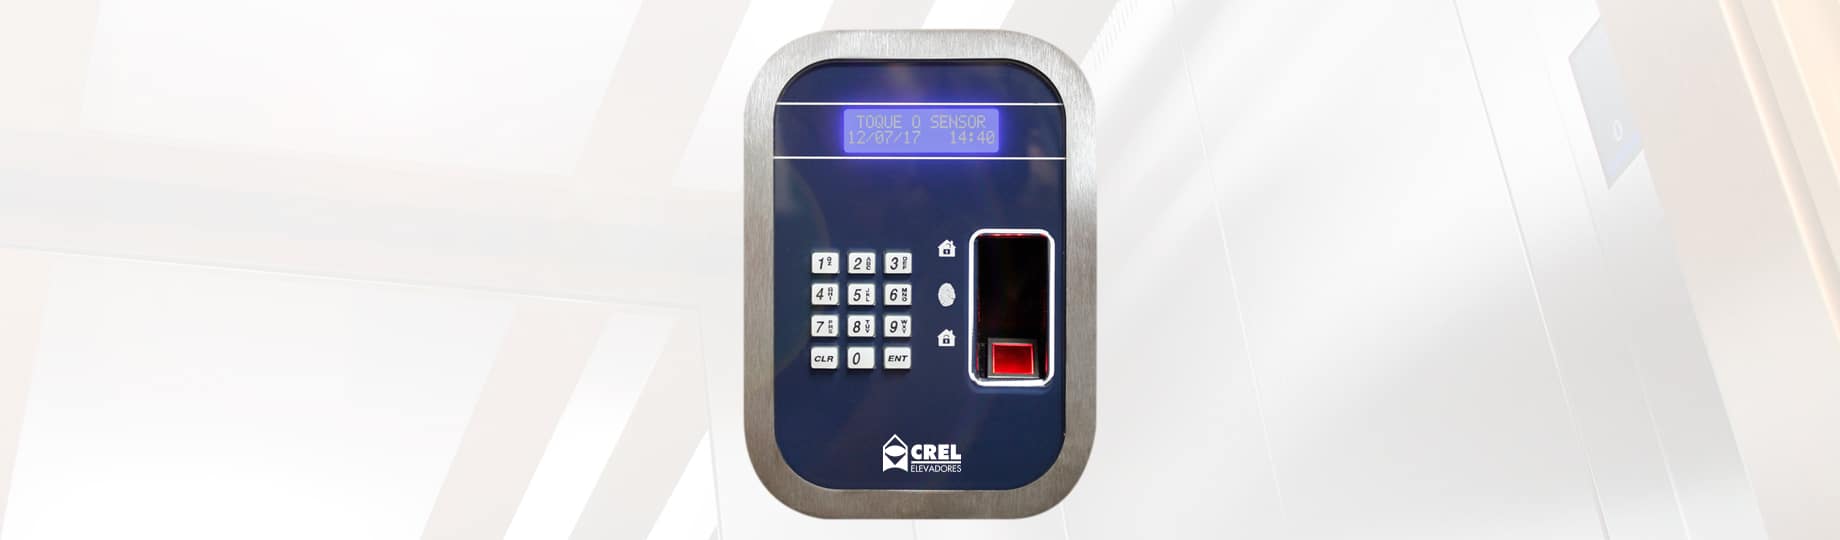 Controle de elevador por biometria